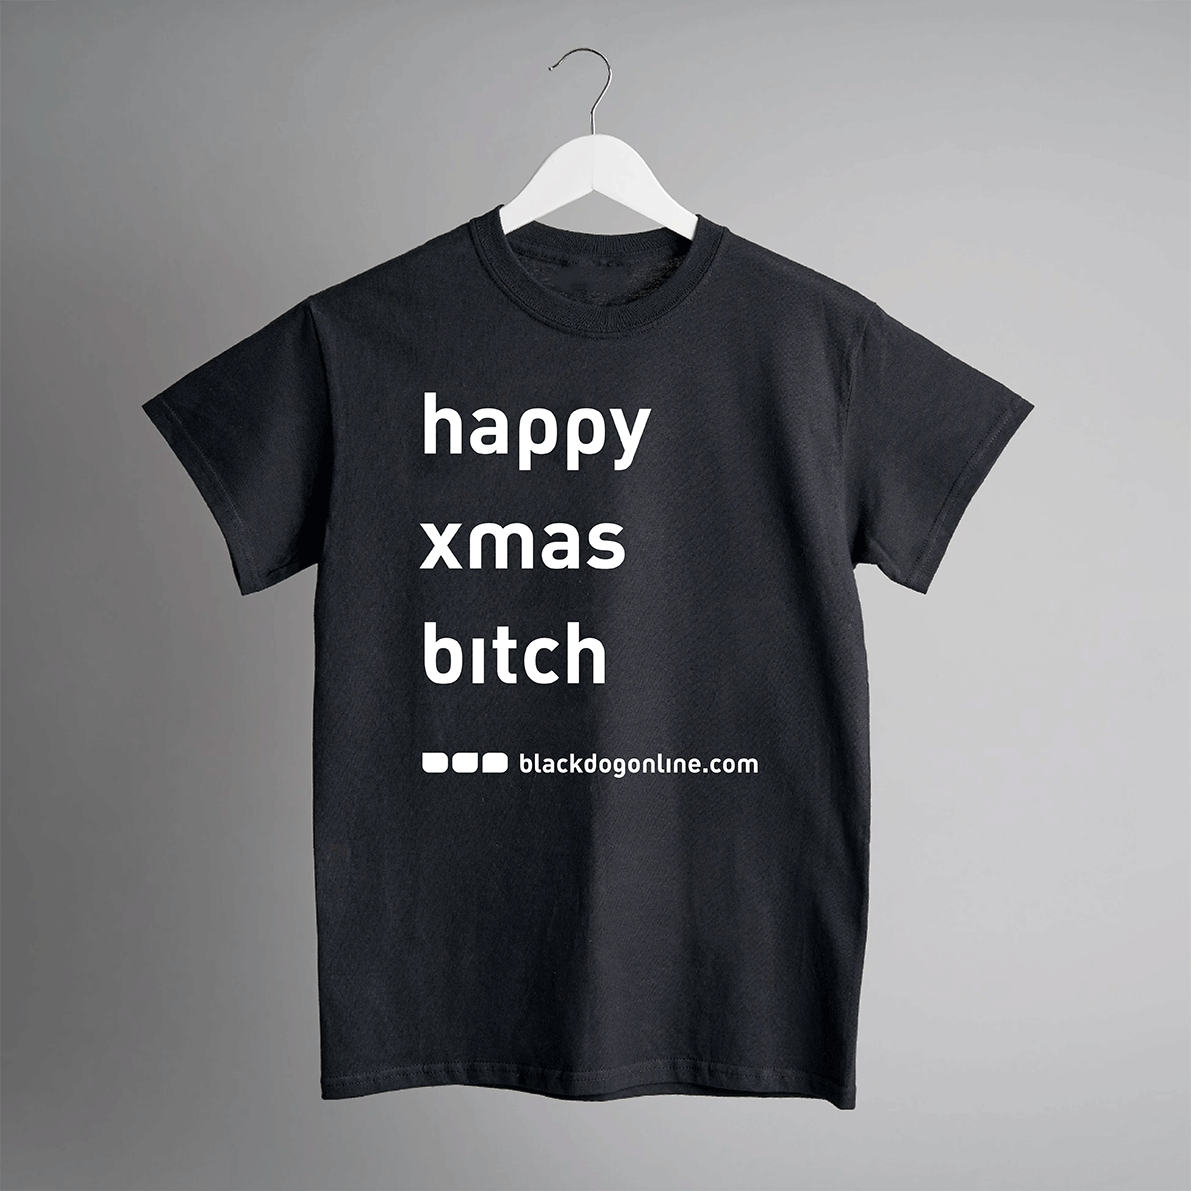 happy xmas bitch t-shirt